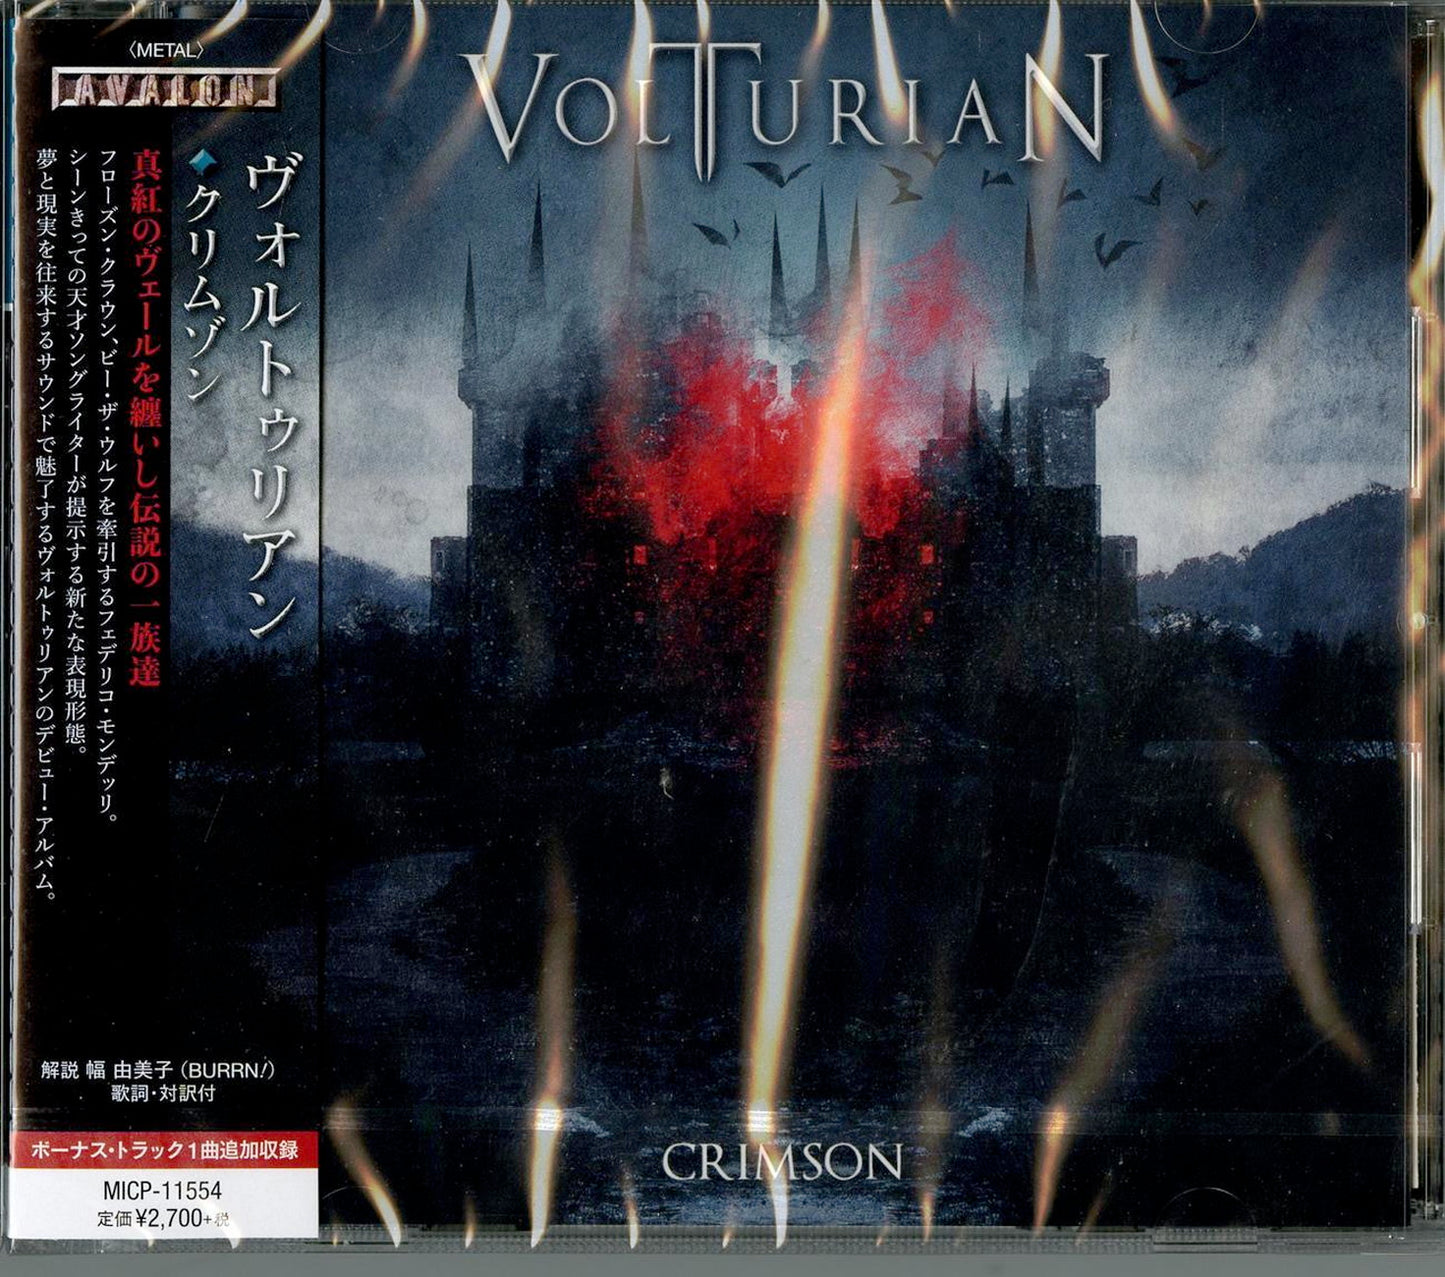 Volturian - Crimson - Japan CD